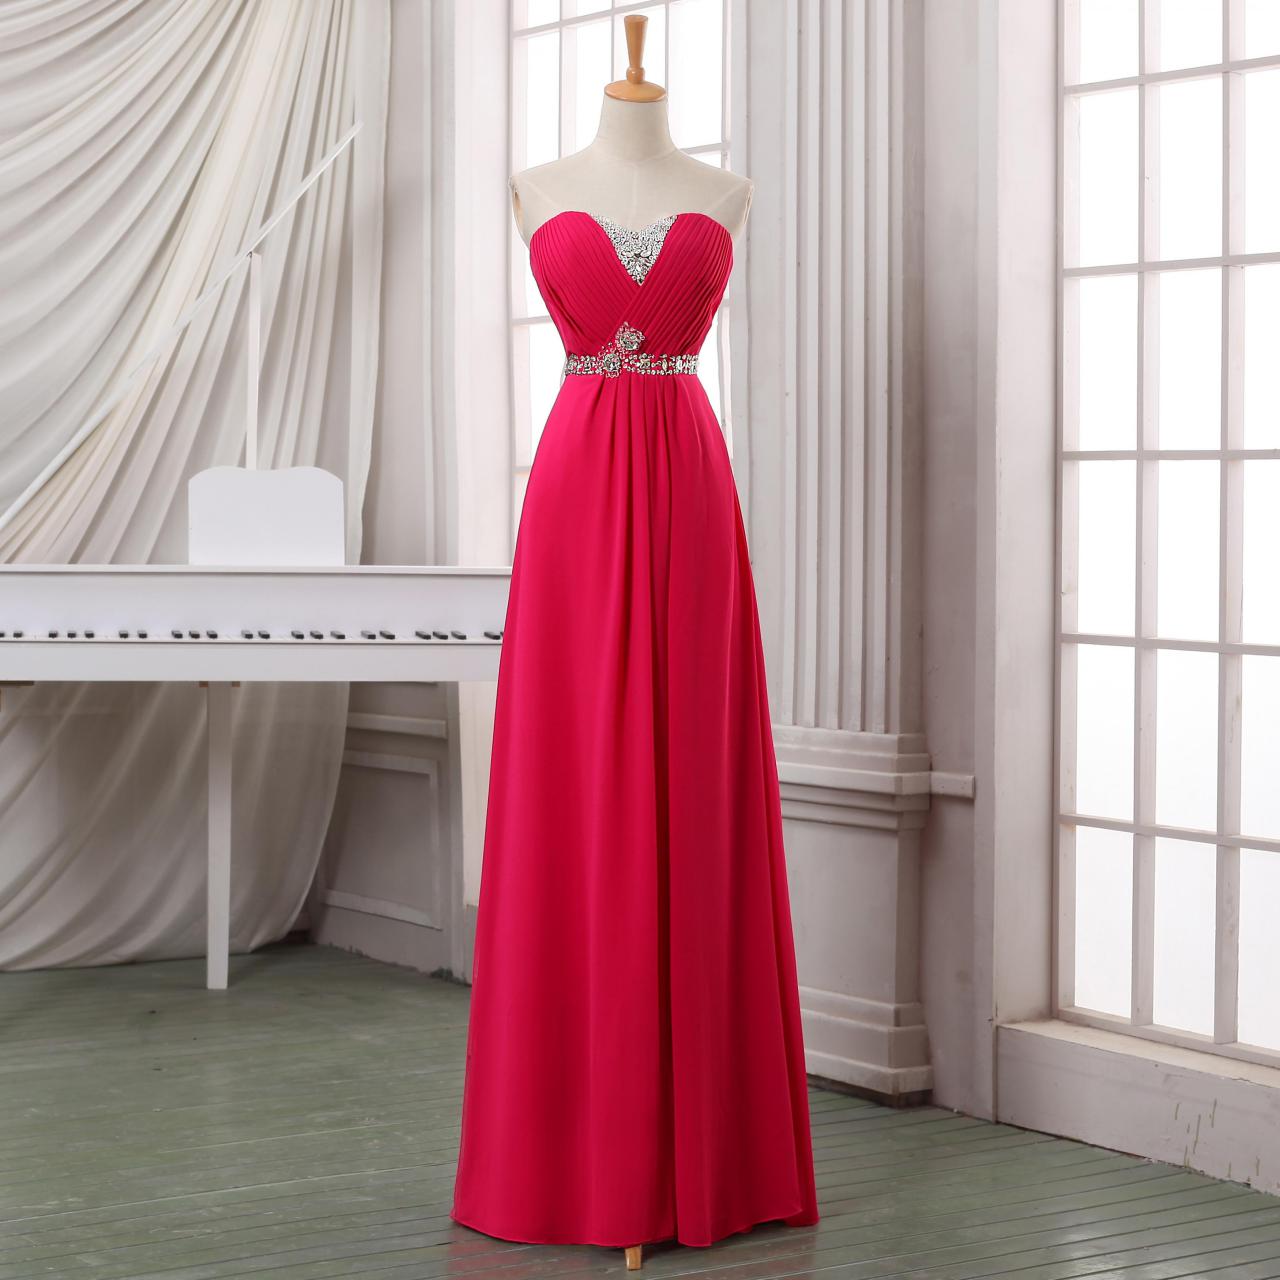 Red Beading Long Chiffon Prom Dress,party Dress,floor Length Evening Dress,red Long Chiffon Homecoming Dress, Homecoming Dress.